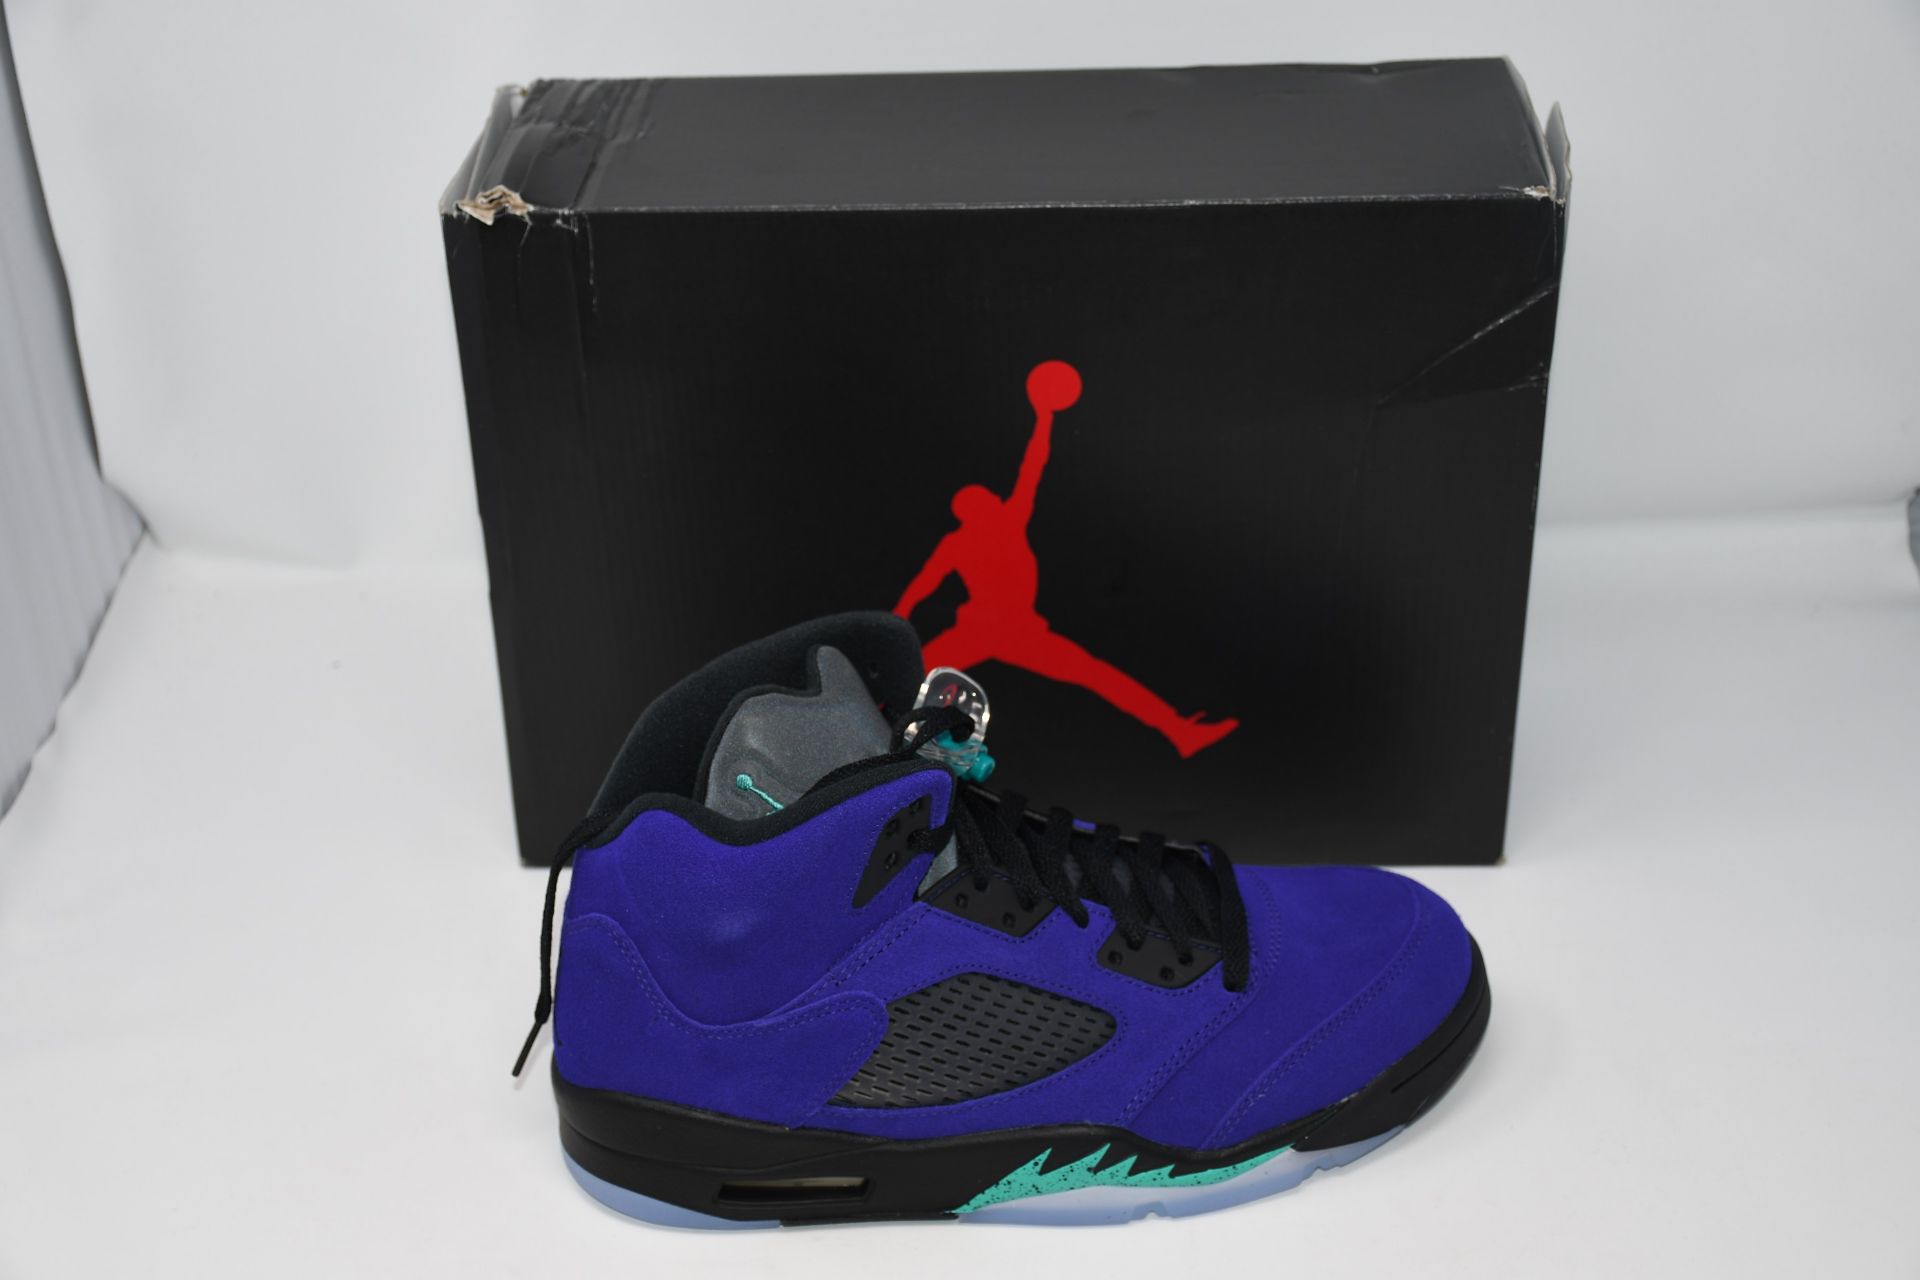 One pair of boxed as new Nike Air Jordan 5 Retro in grape and ice (UK 9).